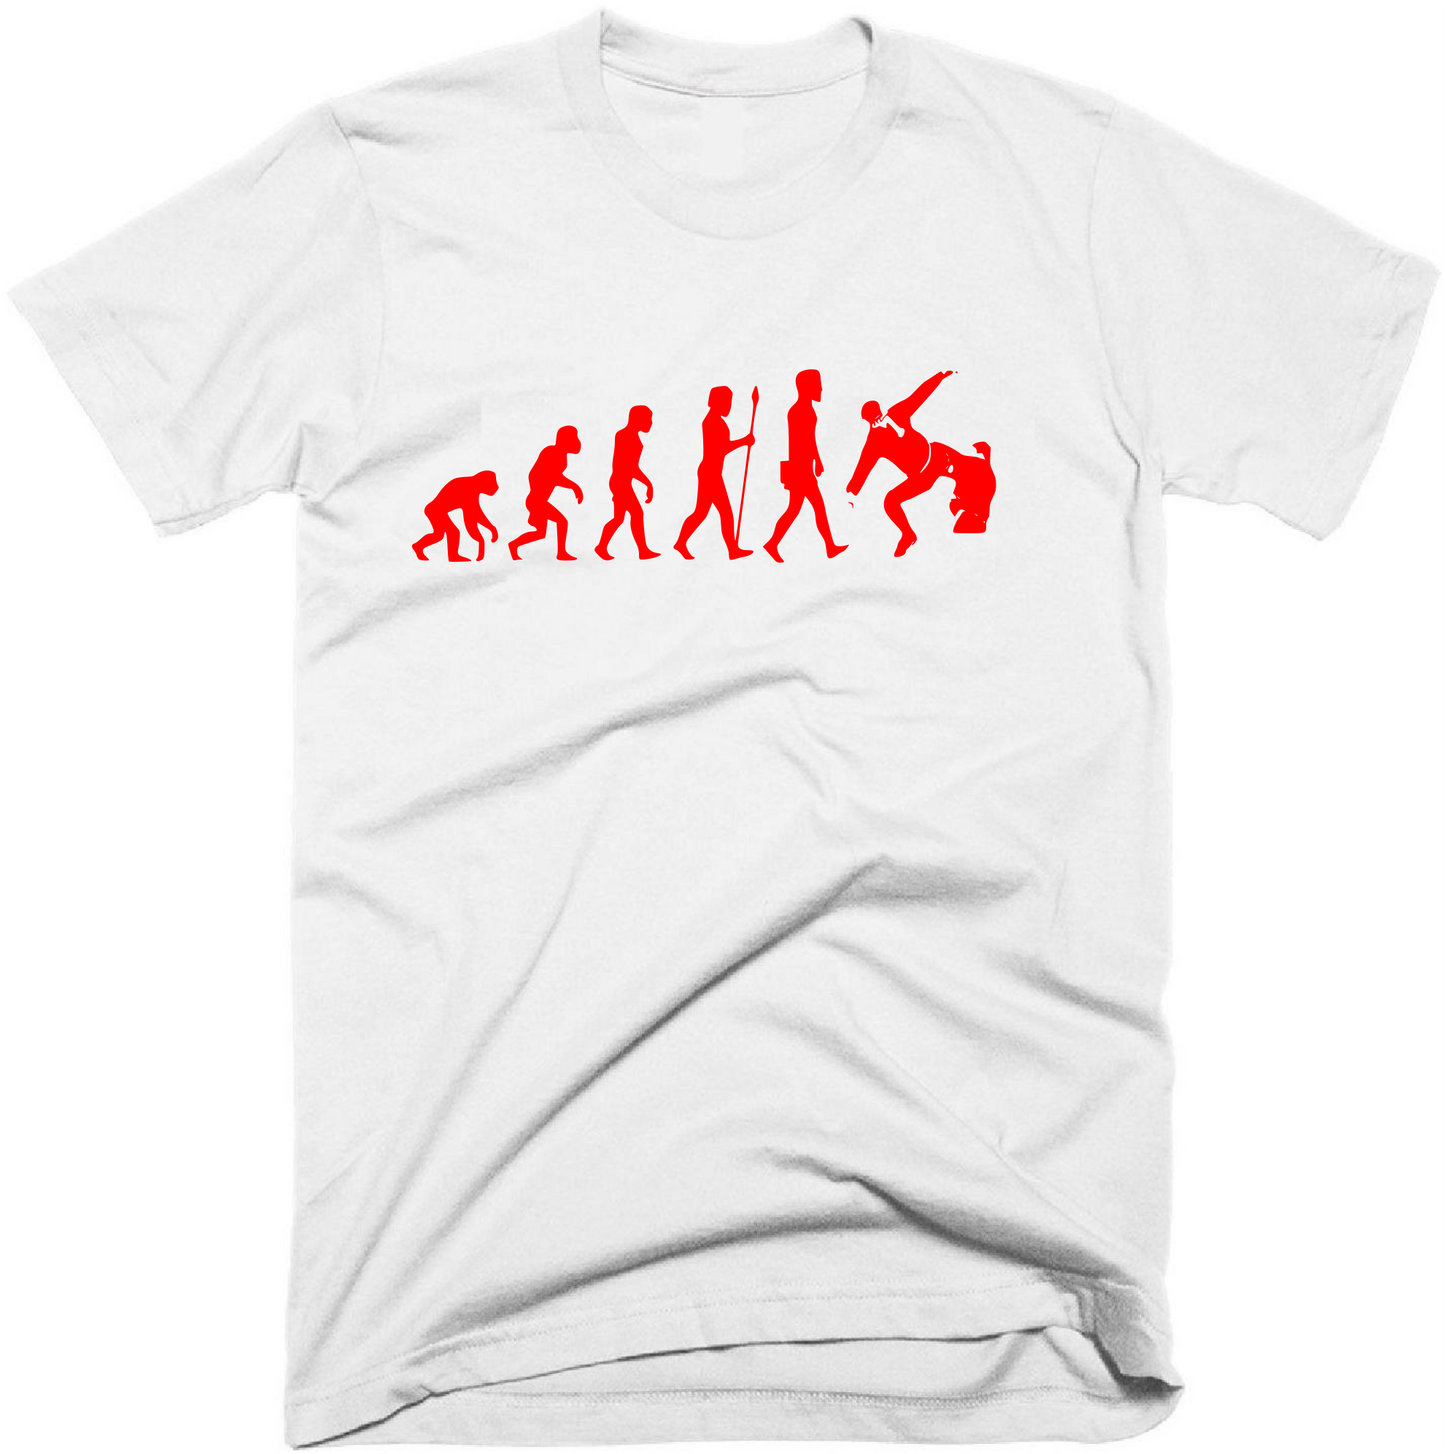 The evolution of Cantona - T-Shirt